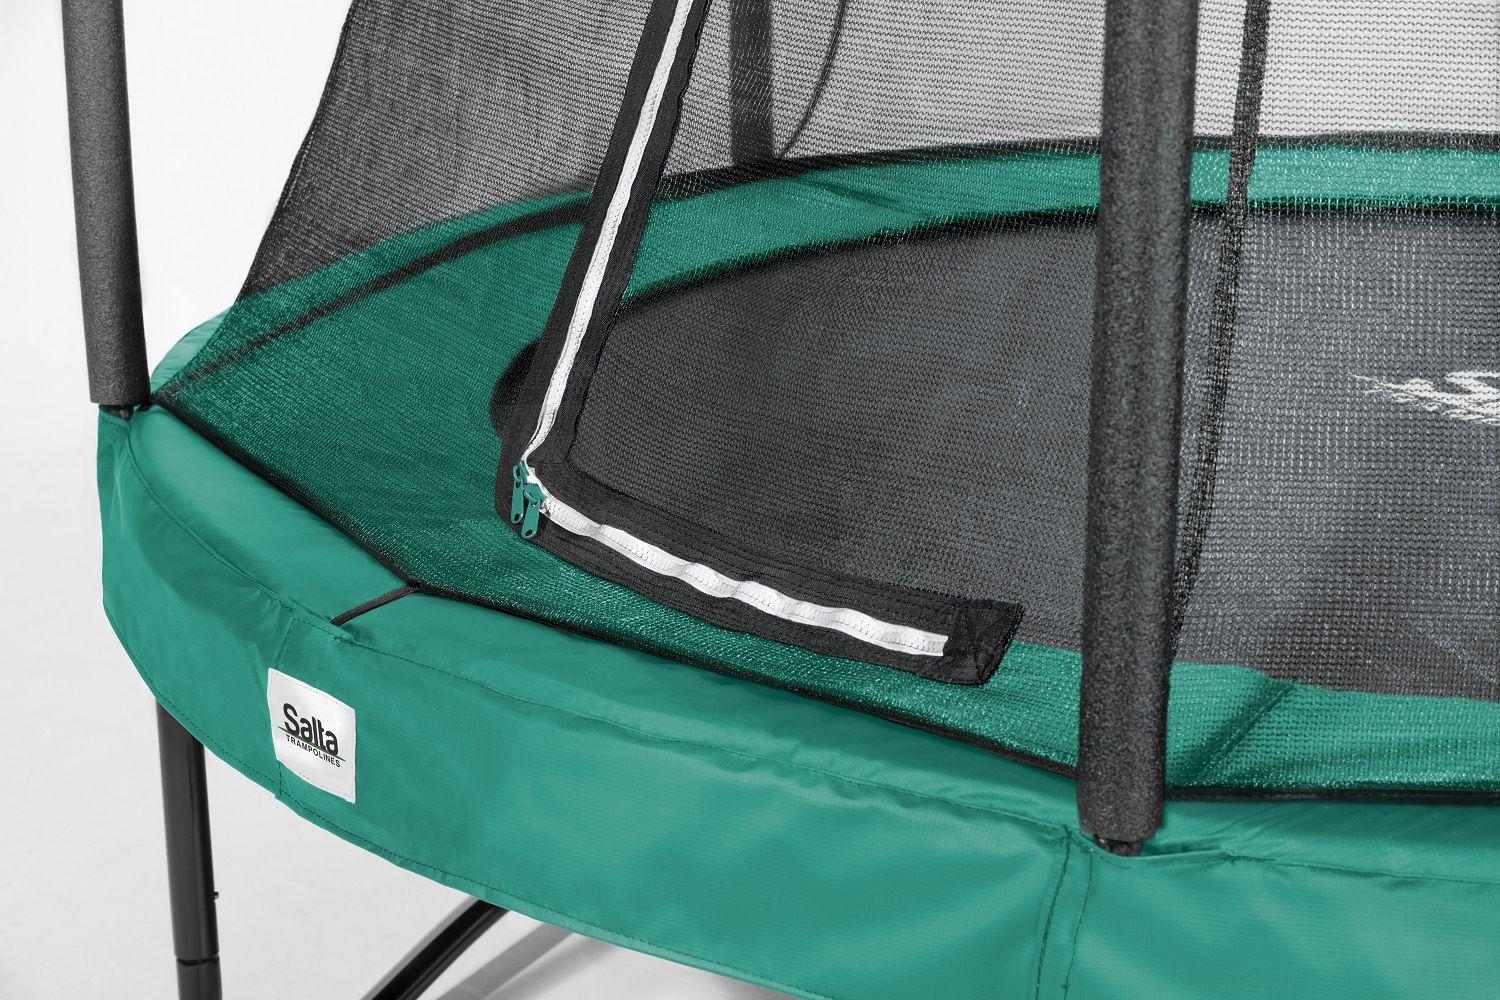 Salta Comfrot edition - 305 cm recreational/backyard trampoline